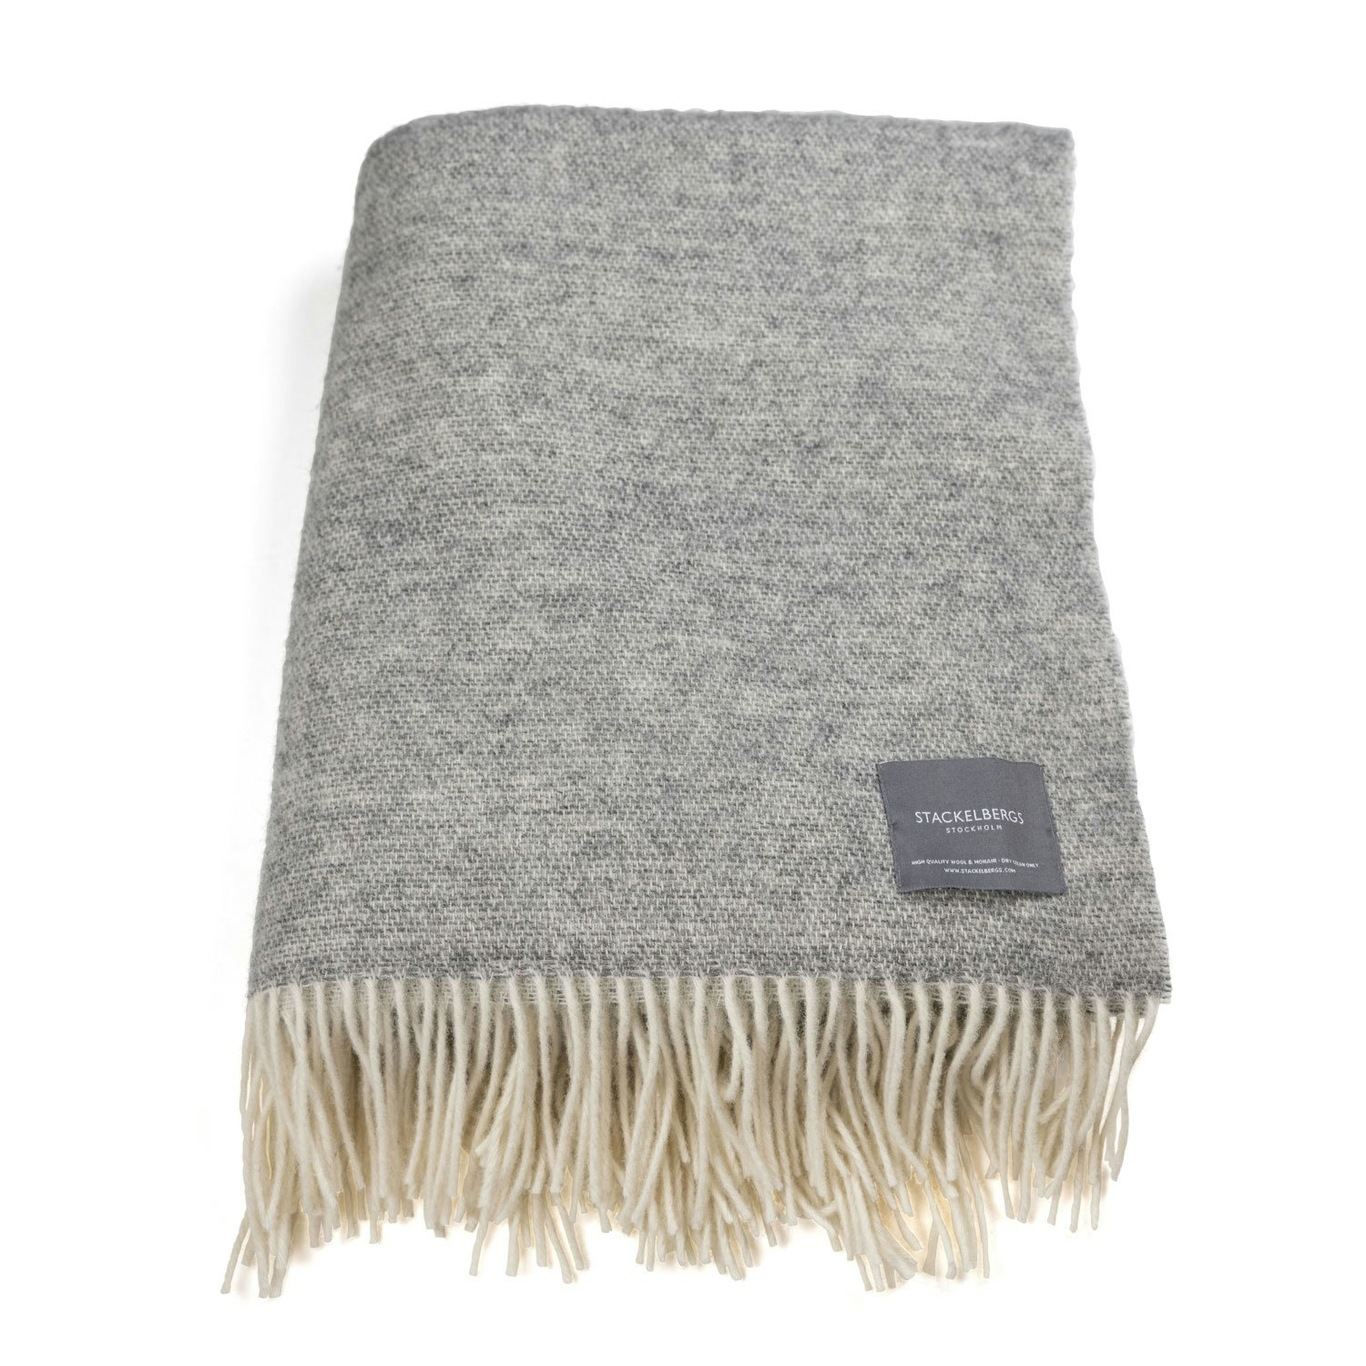 Premium Photo  Grey melange wool texture as a background